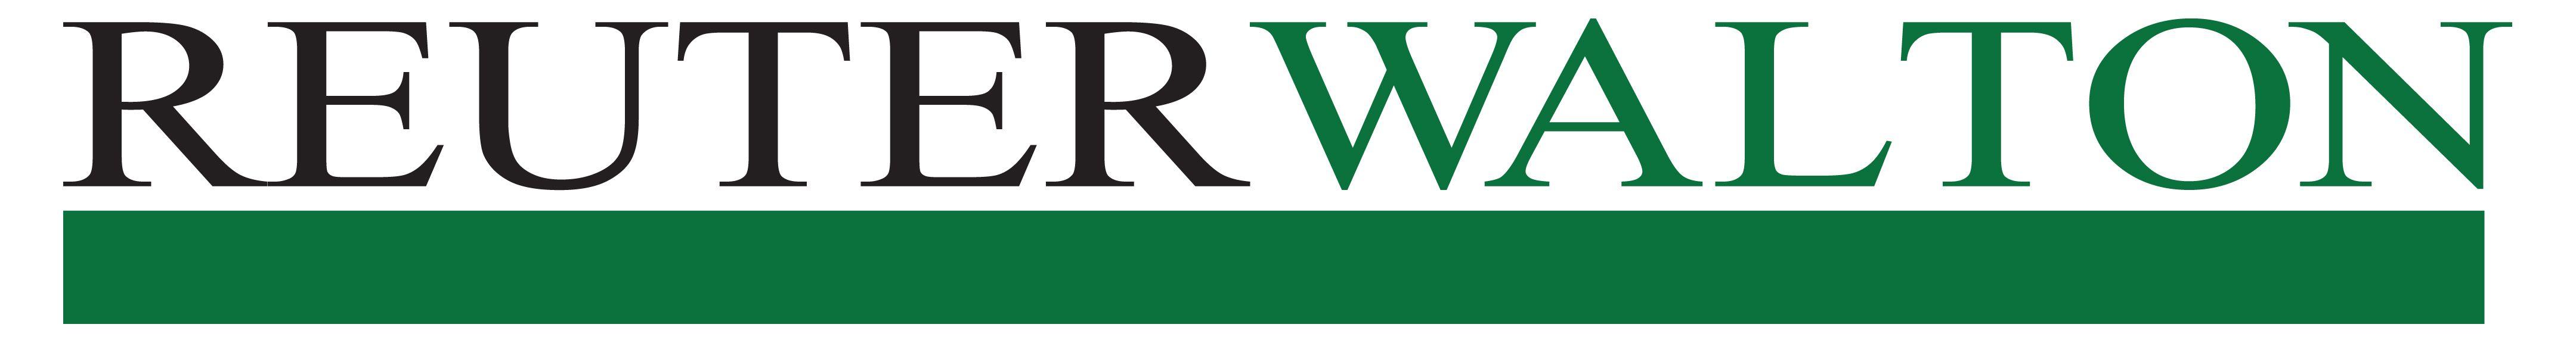 Walton Logo - Minnesota Residential and Commercial Construction :: Reuter Walton